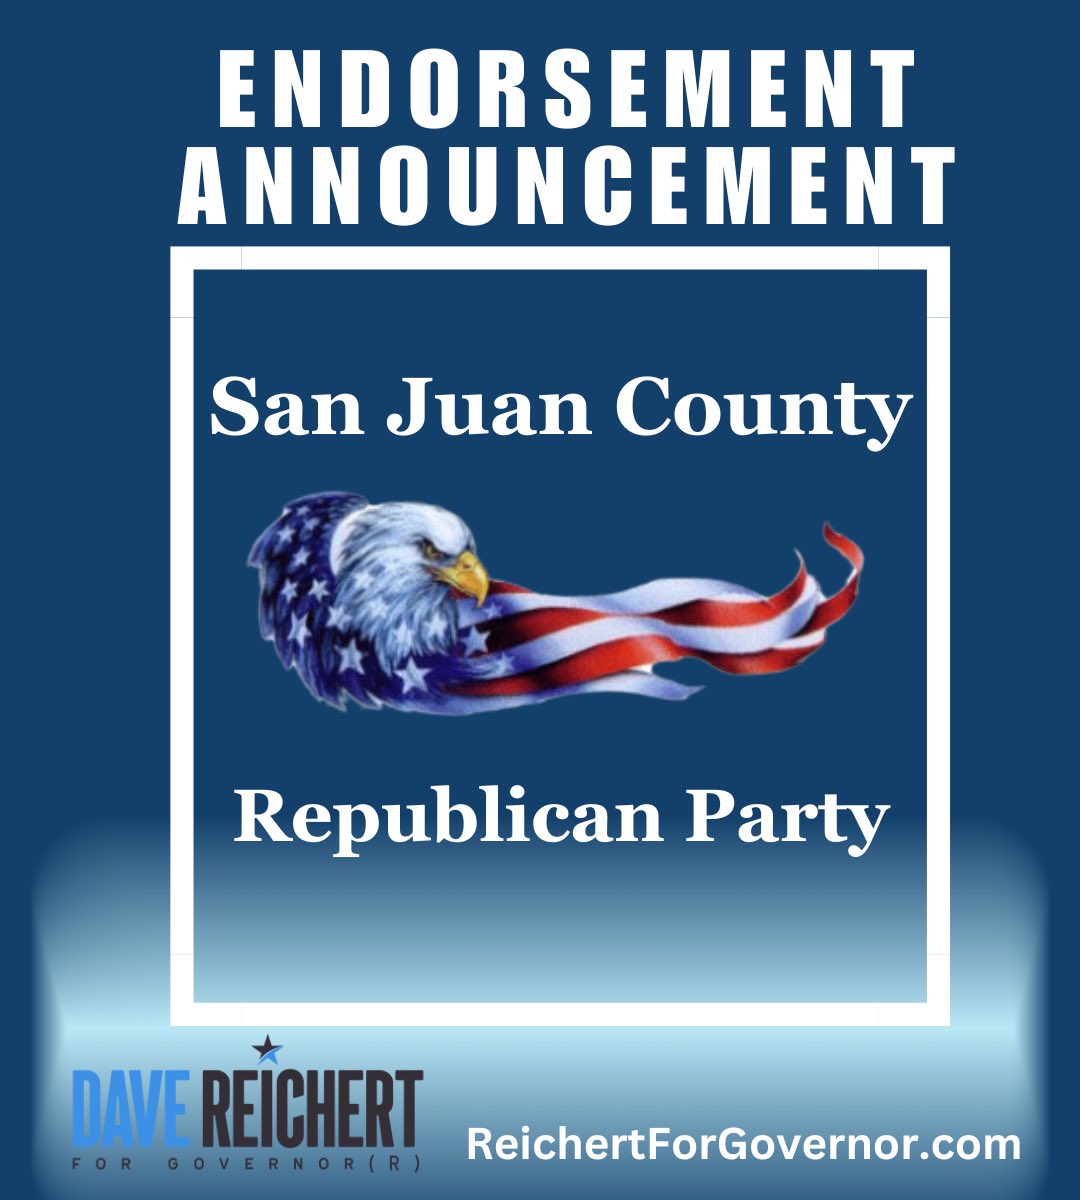 Thank you, San Juan County, for your endorsement!

#ChangeWA #FixWA #DoTheRightThing